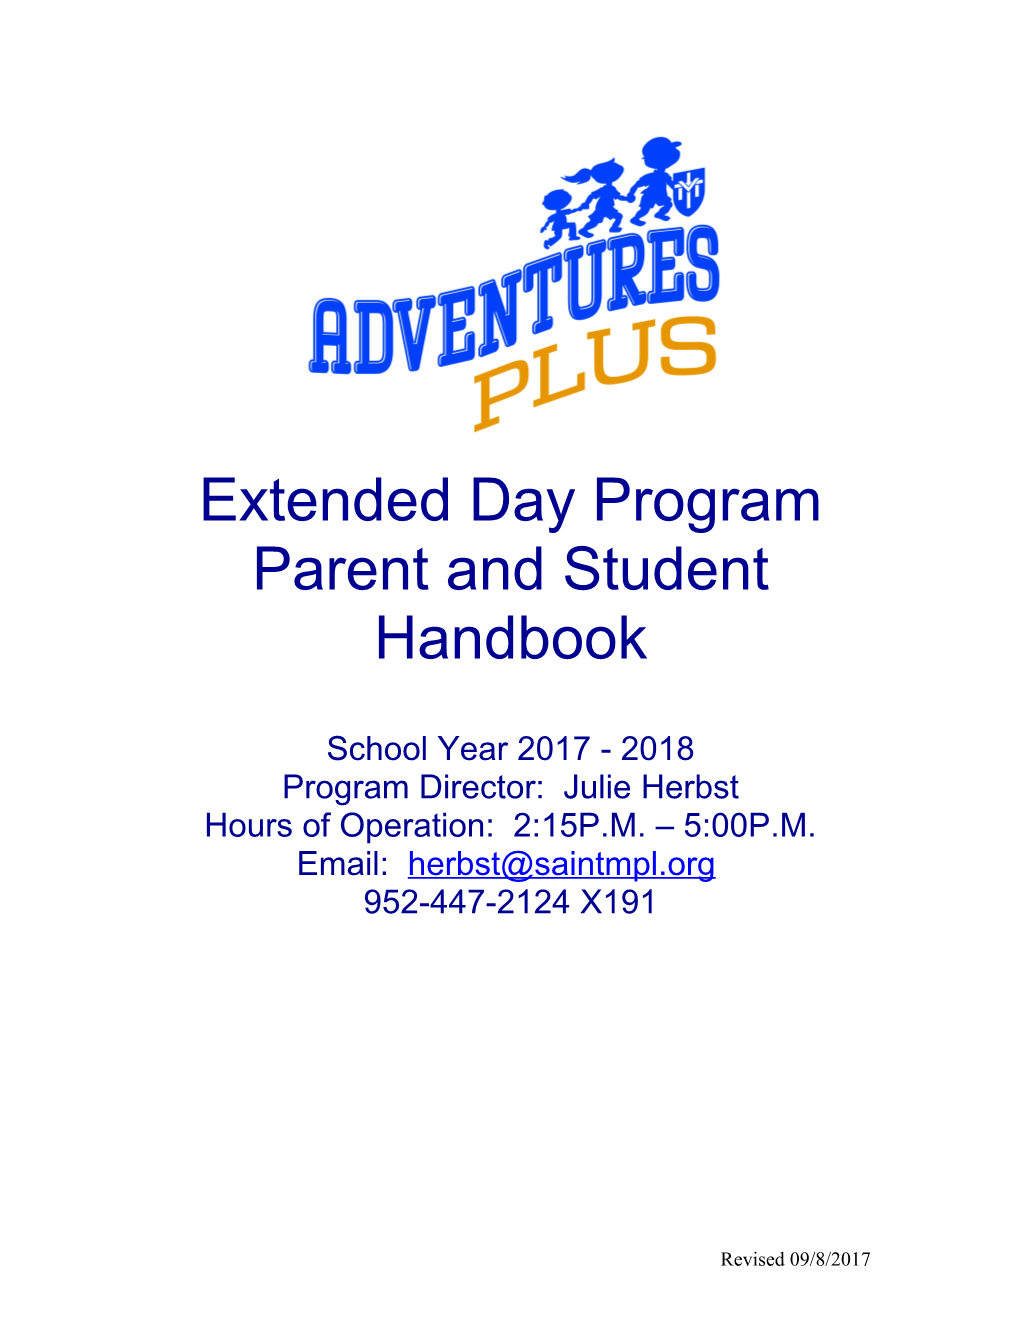 Parent and Student Handbook s2